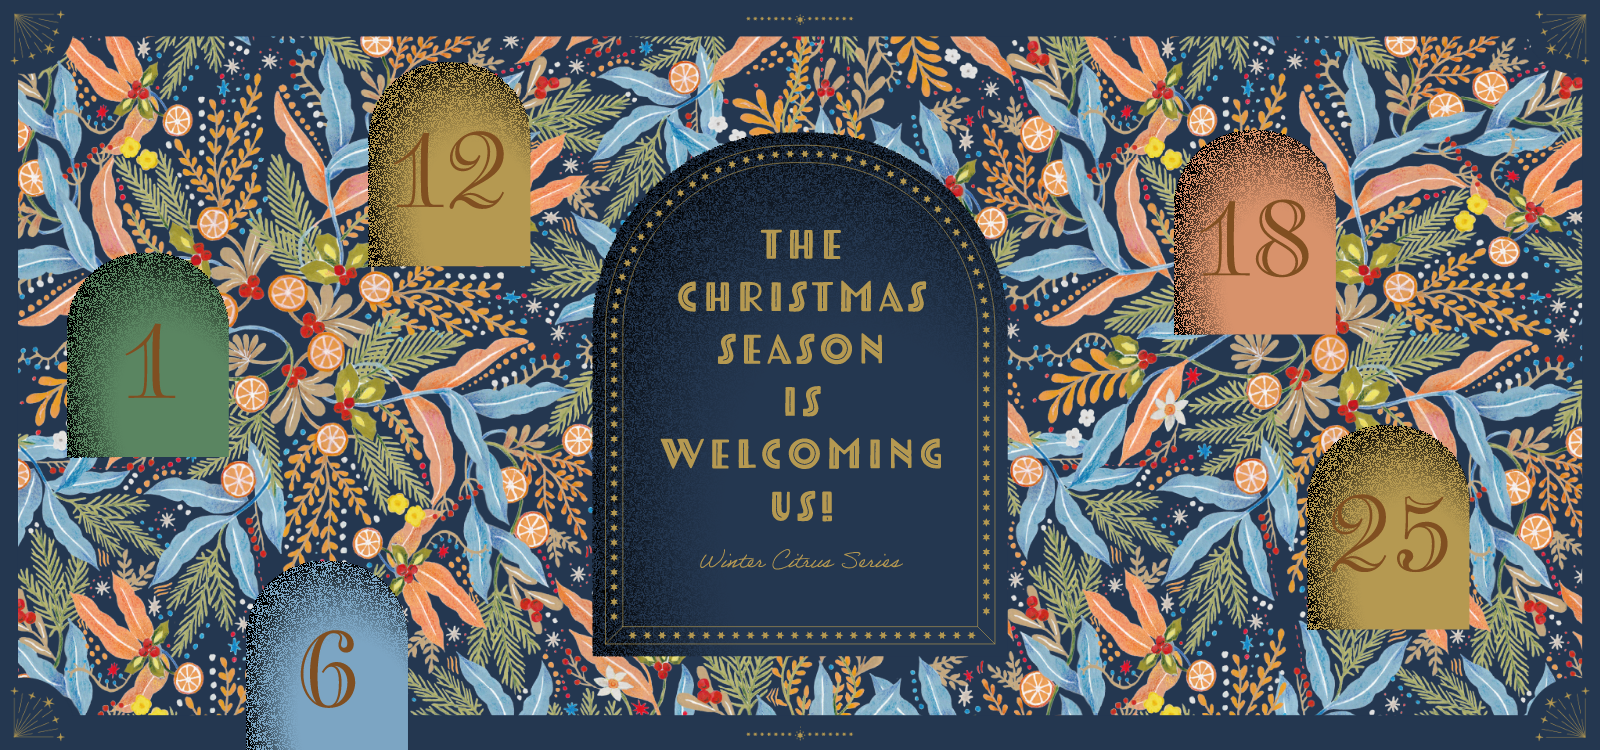 THE CHRISTMAS SEASON IS WELCOMING US! Winter Citrus Series